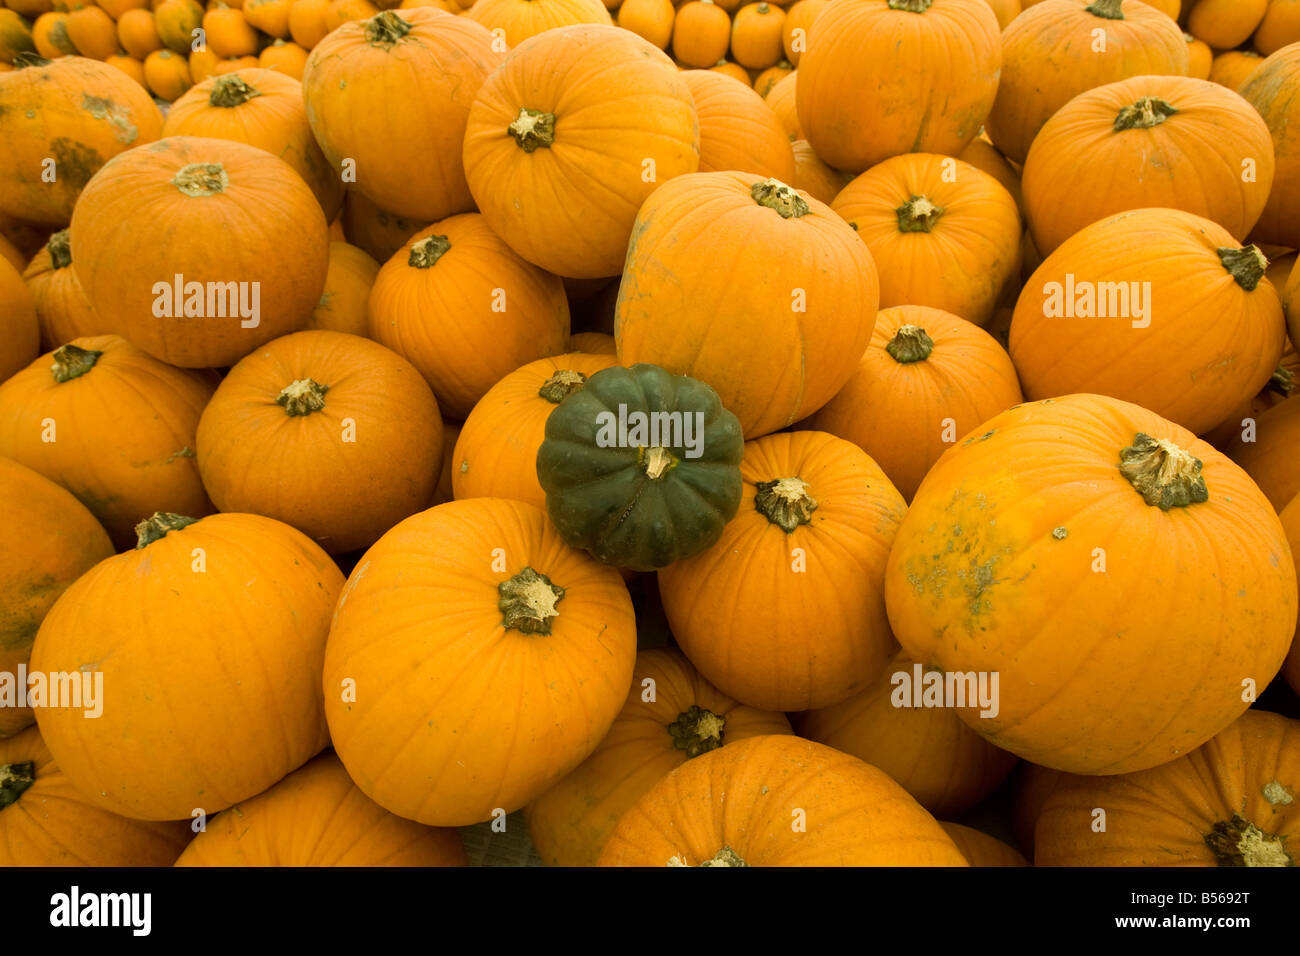 One green pumpkin among a sea of traditional orange pumpkins Stock Photo